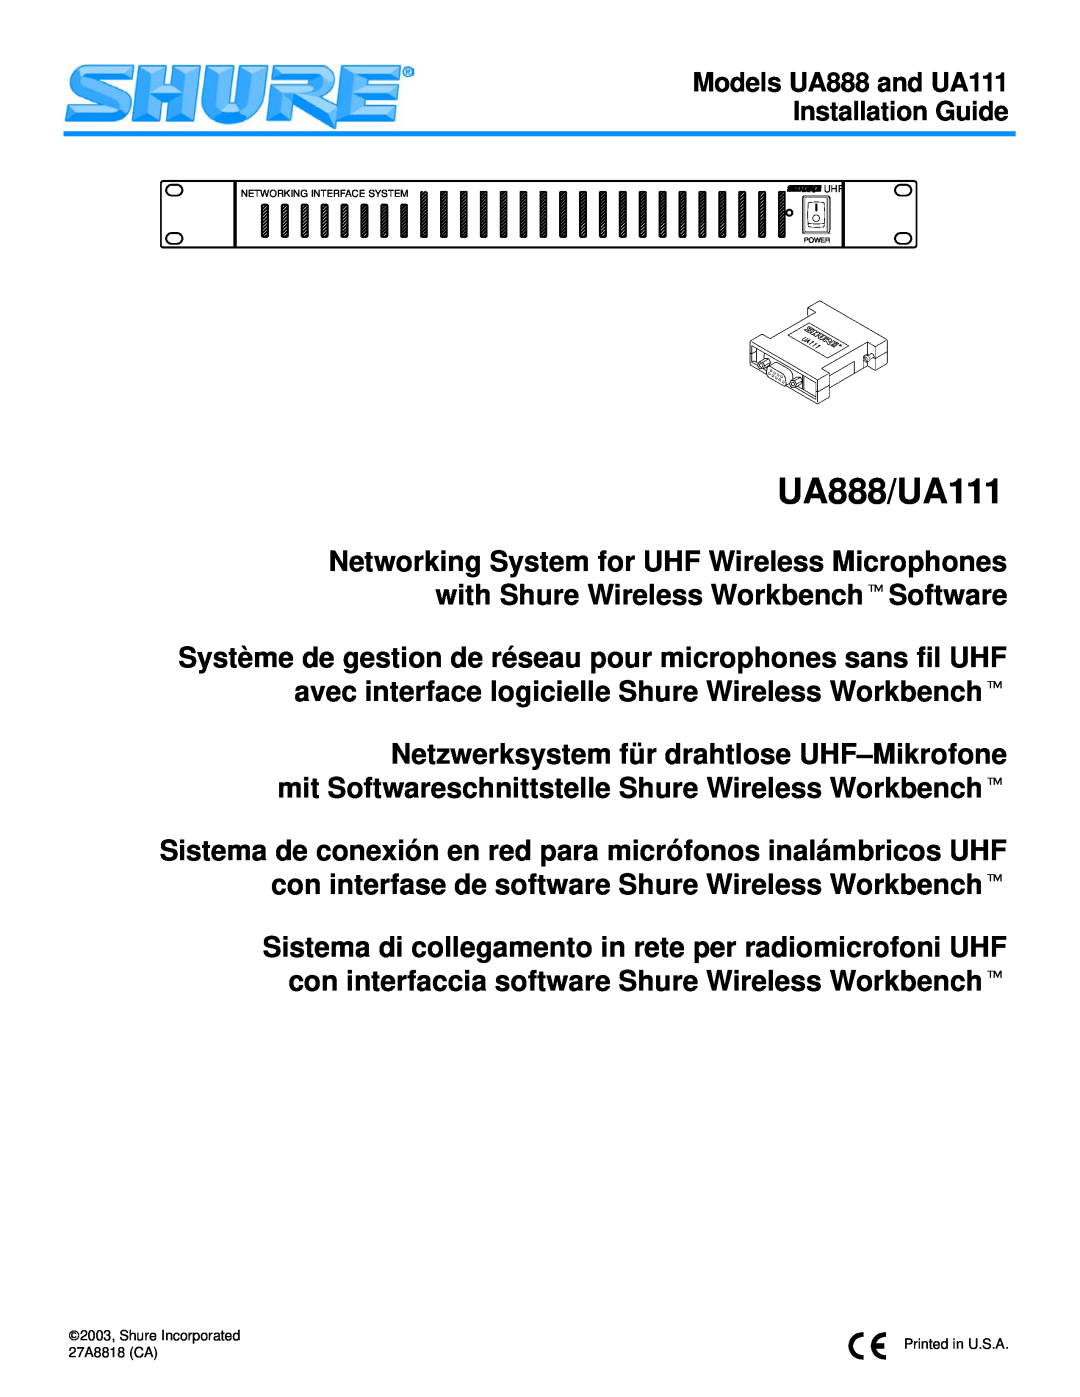 Shure manual UA888/UA111, Models UA888 and UA111 Installation Guide 